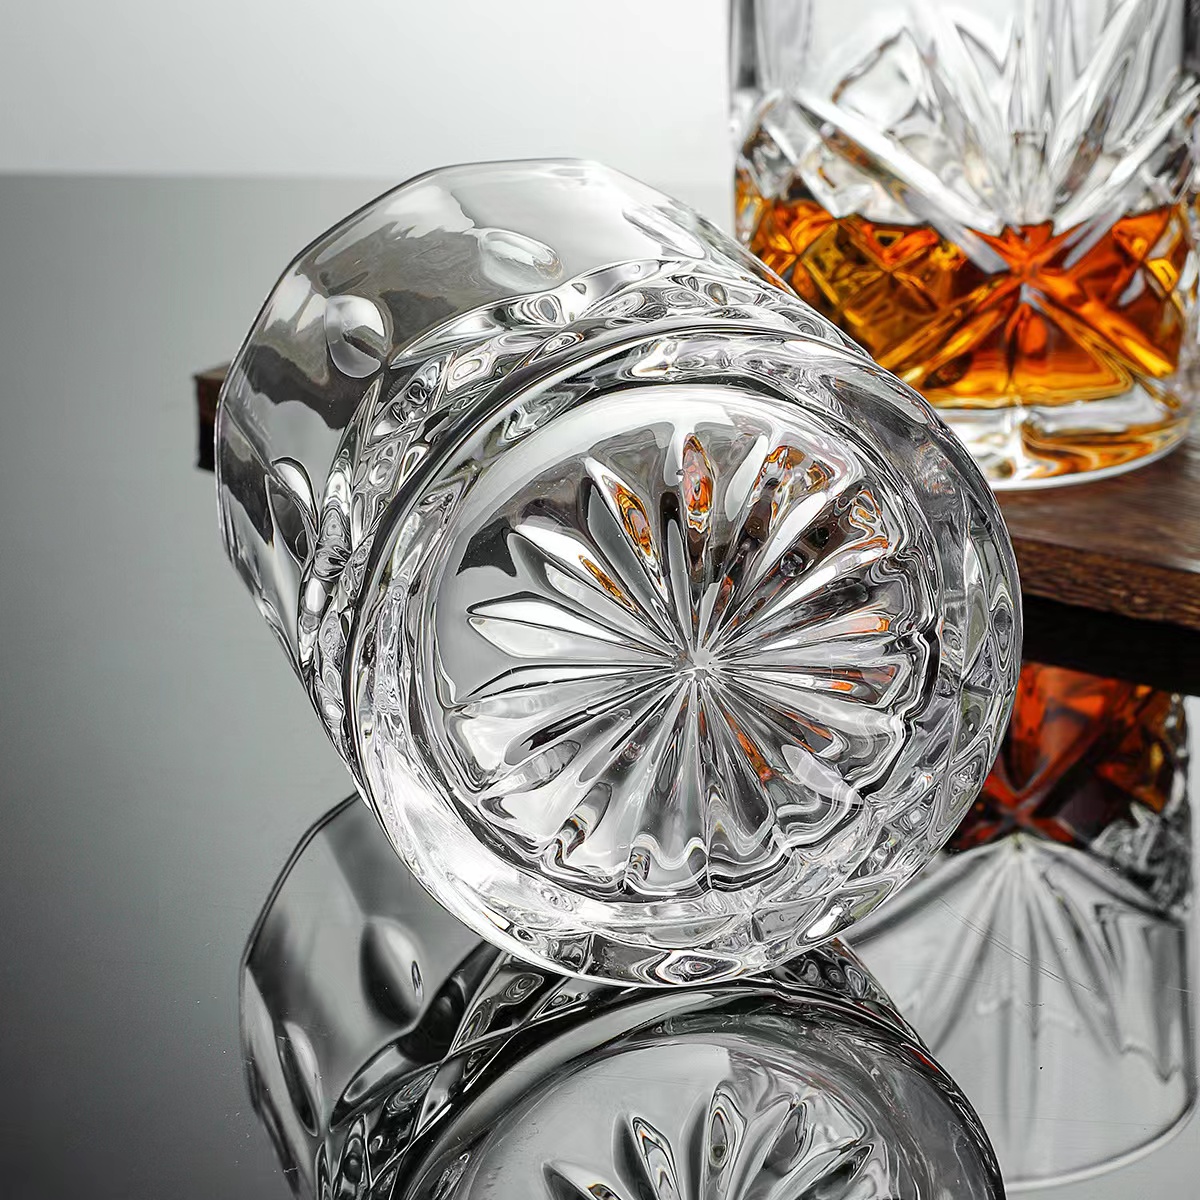 Old Fashioned Whisky Glazen Foar Scotch, Bourbon, Liquor04 - 副本